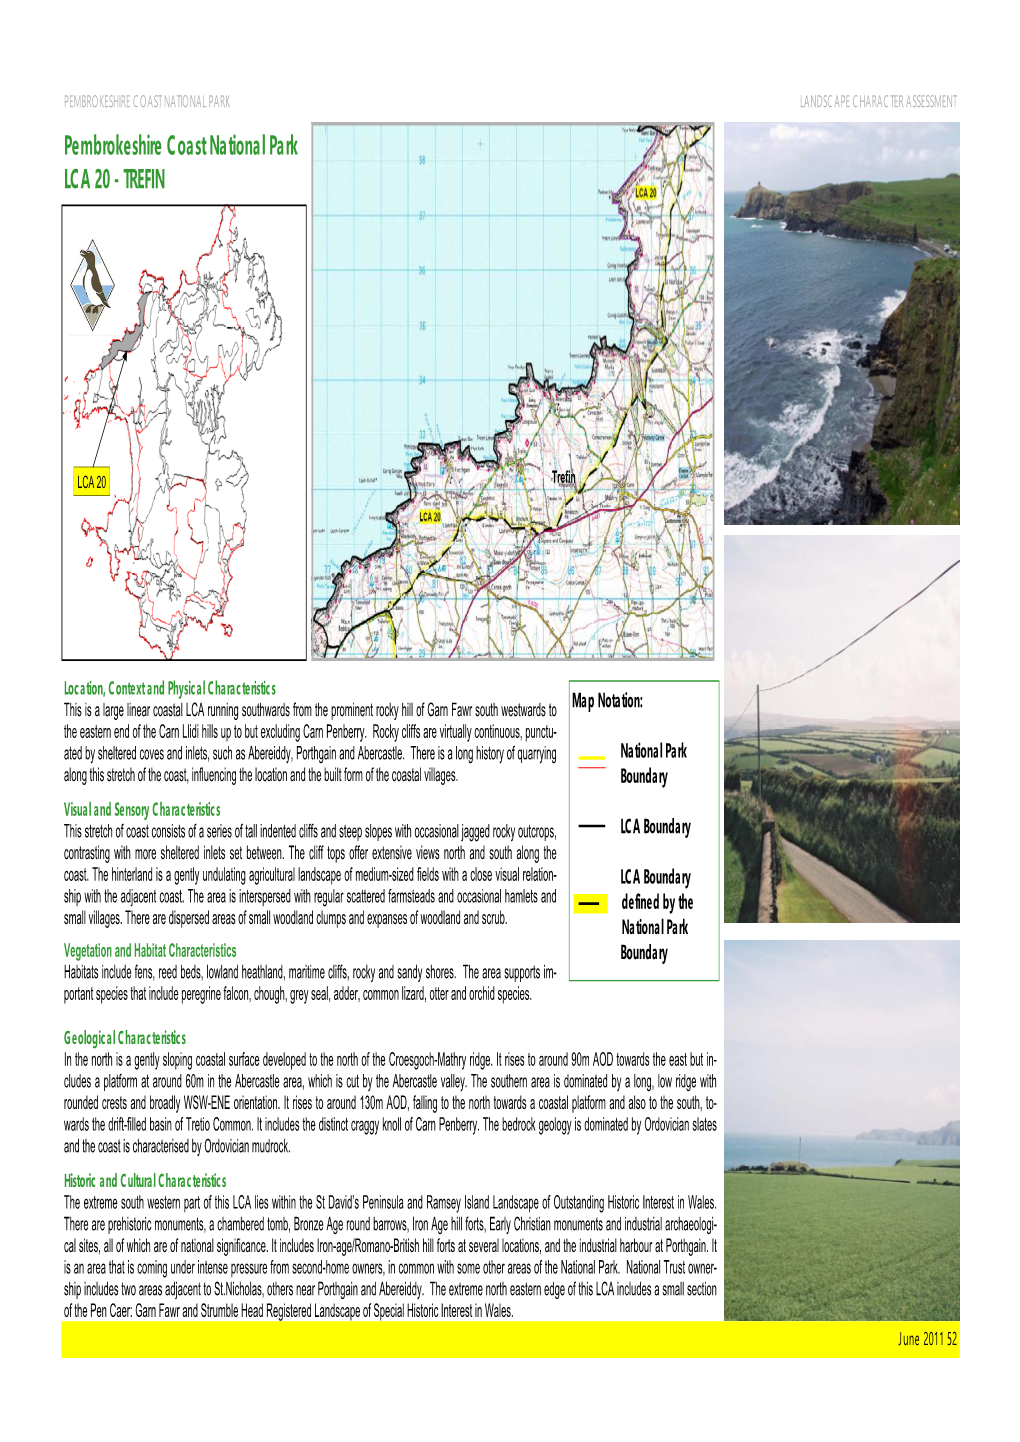 Pembrokeshire Coast National Park LCA 20 - TREFIN